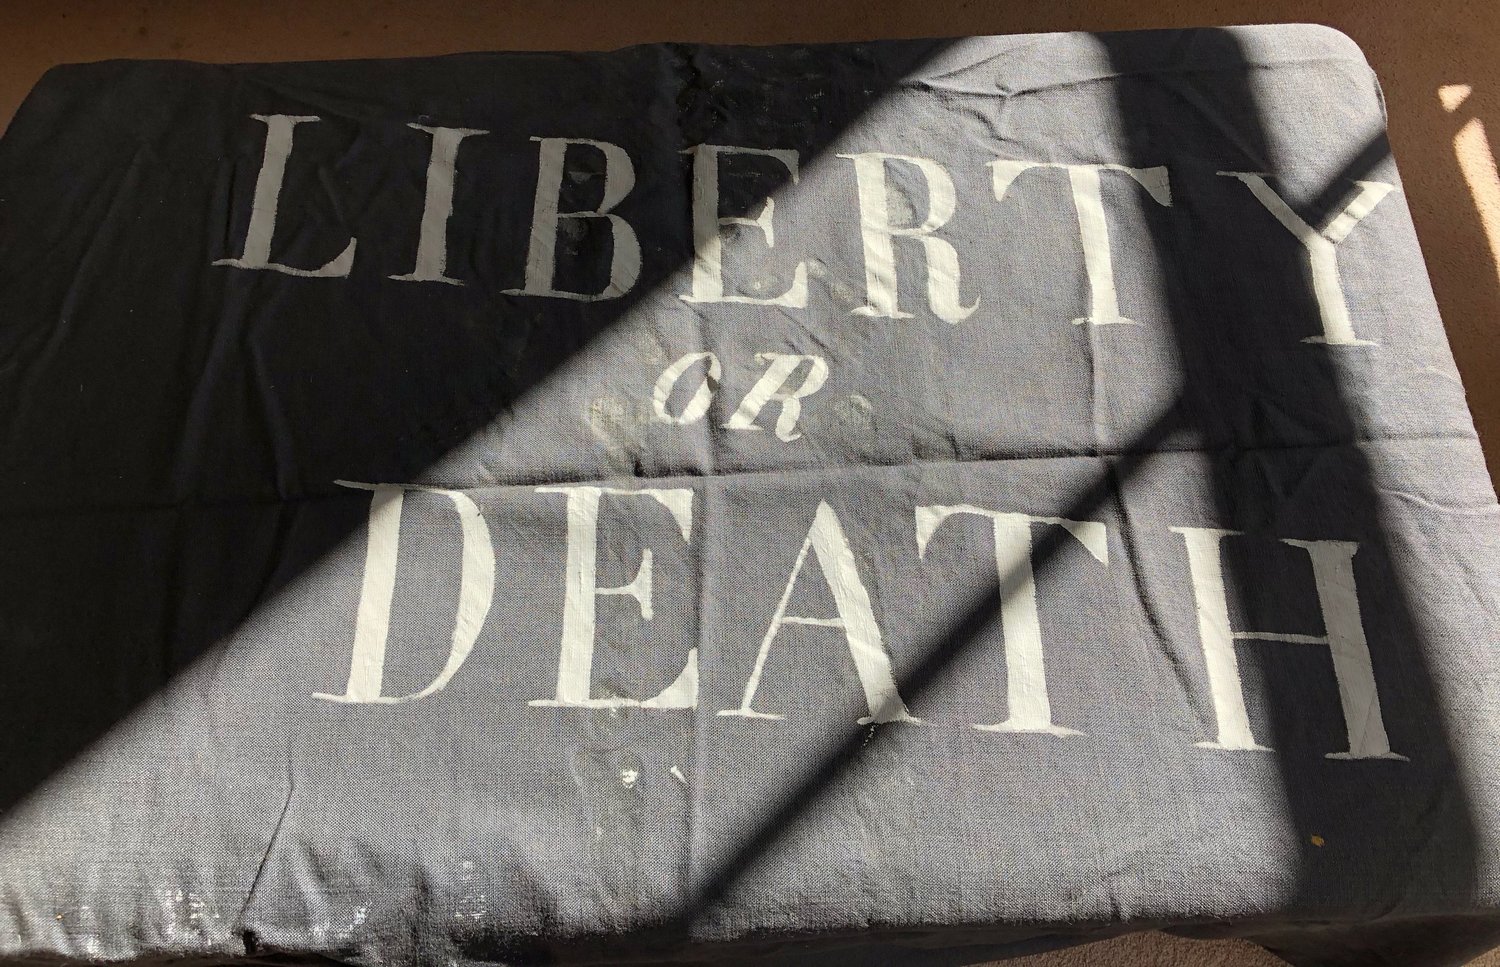 Black+Liberty+or+Death.jpg